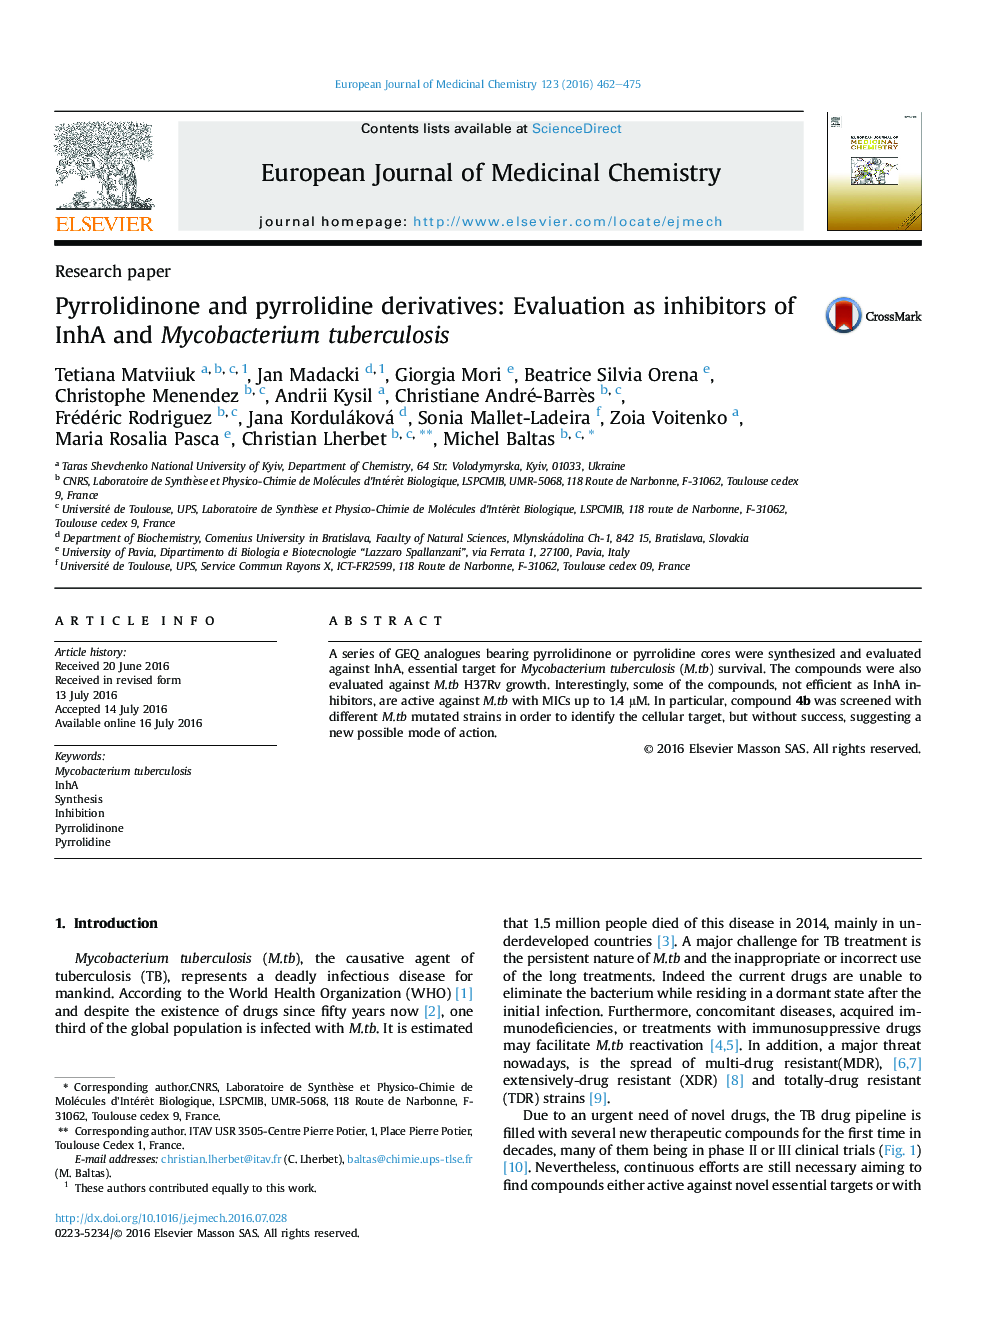 Pyrrolidinone and pyrrolidine derivatives: Evaluation as inhibitors of InhA and Mycobacterium tuberculosis